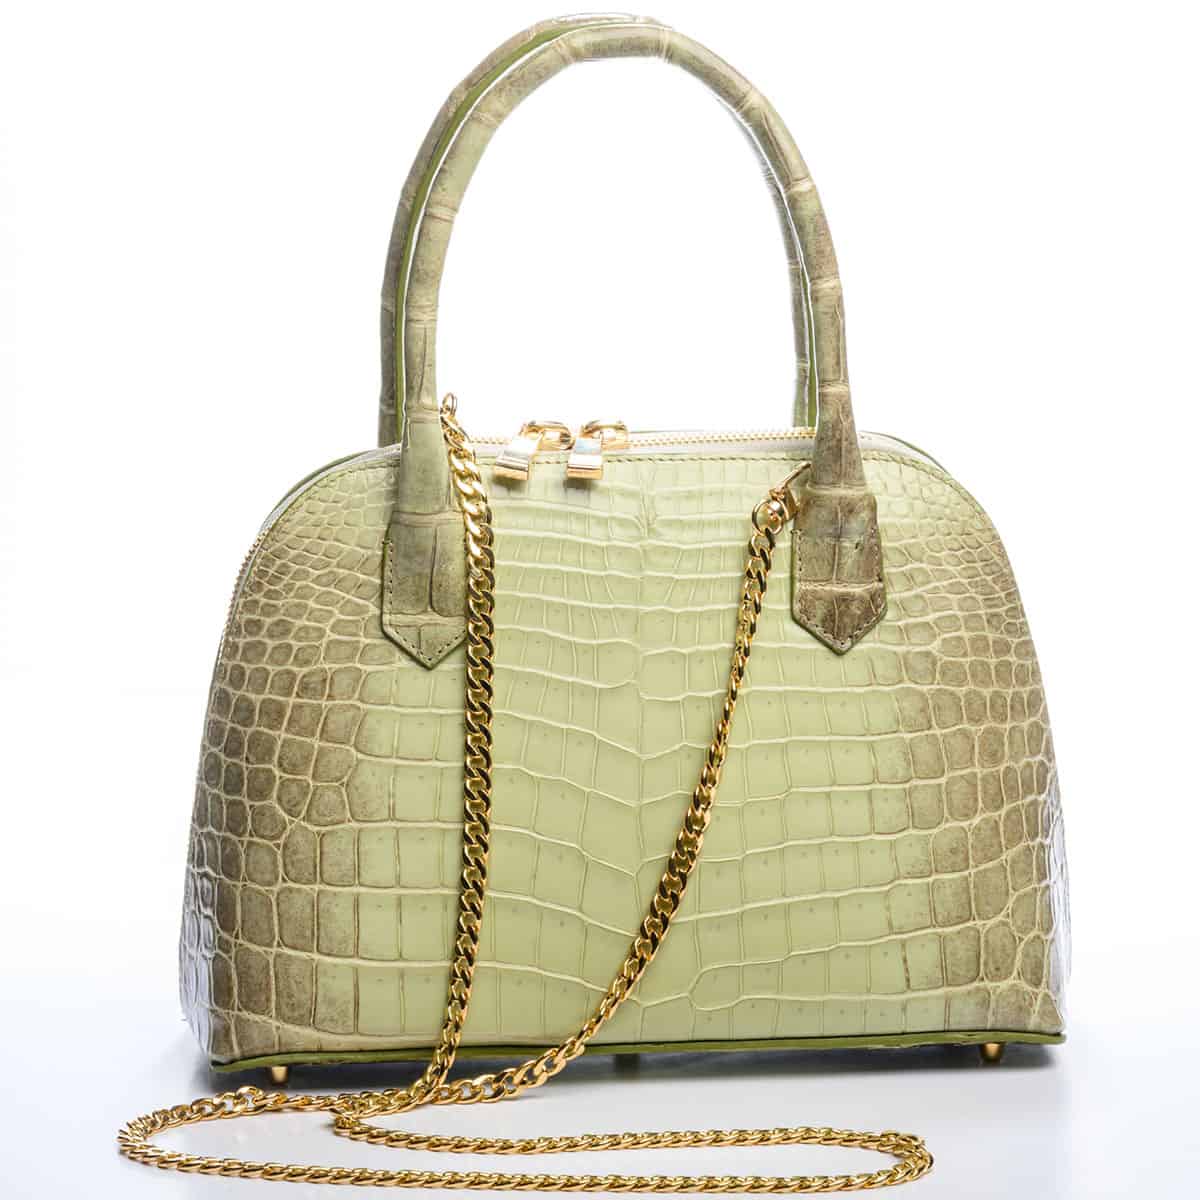 Marsellaise Handbag, Seafoam Green Alligator with Gray Accents – Baron Paris